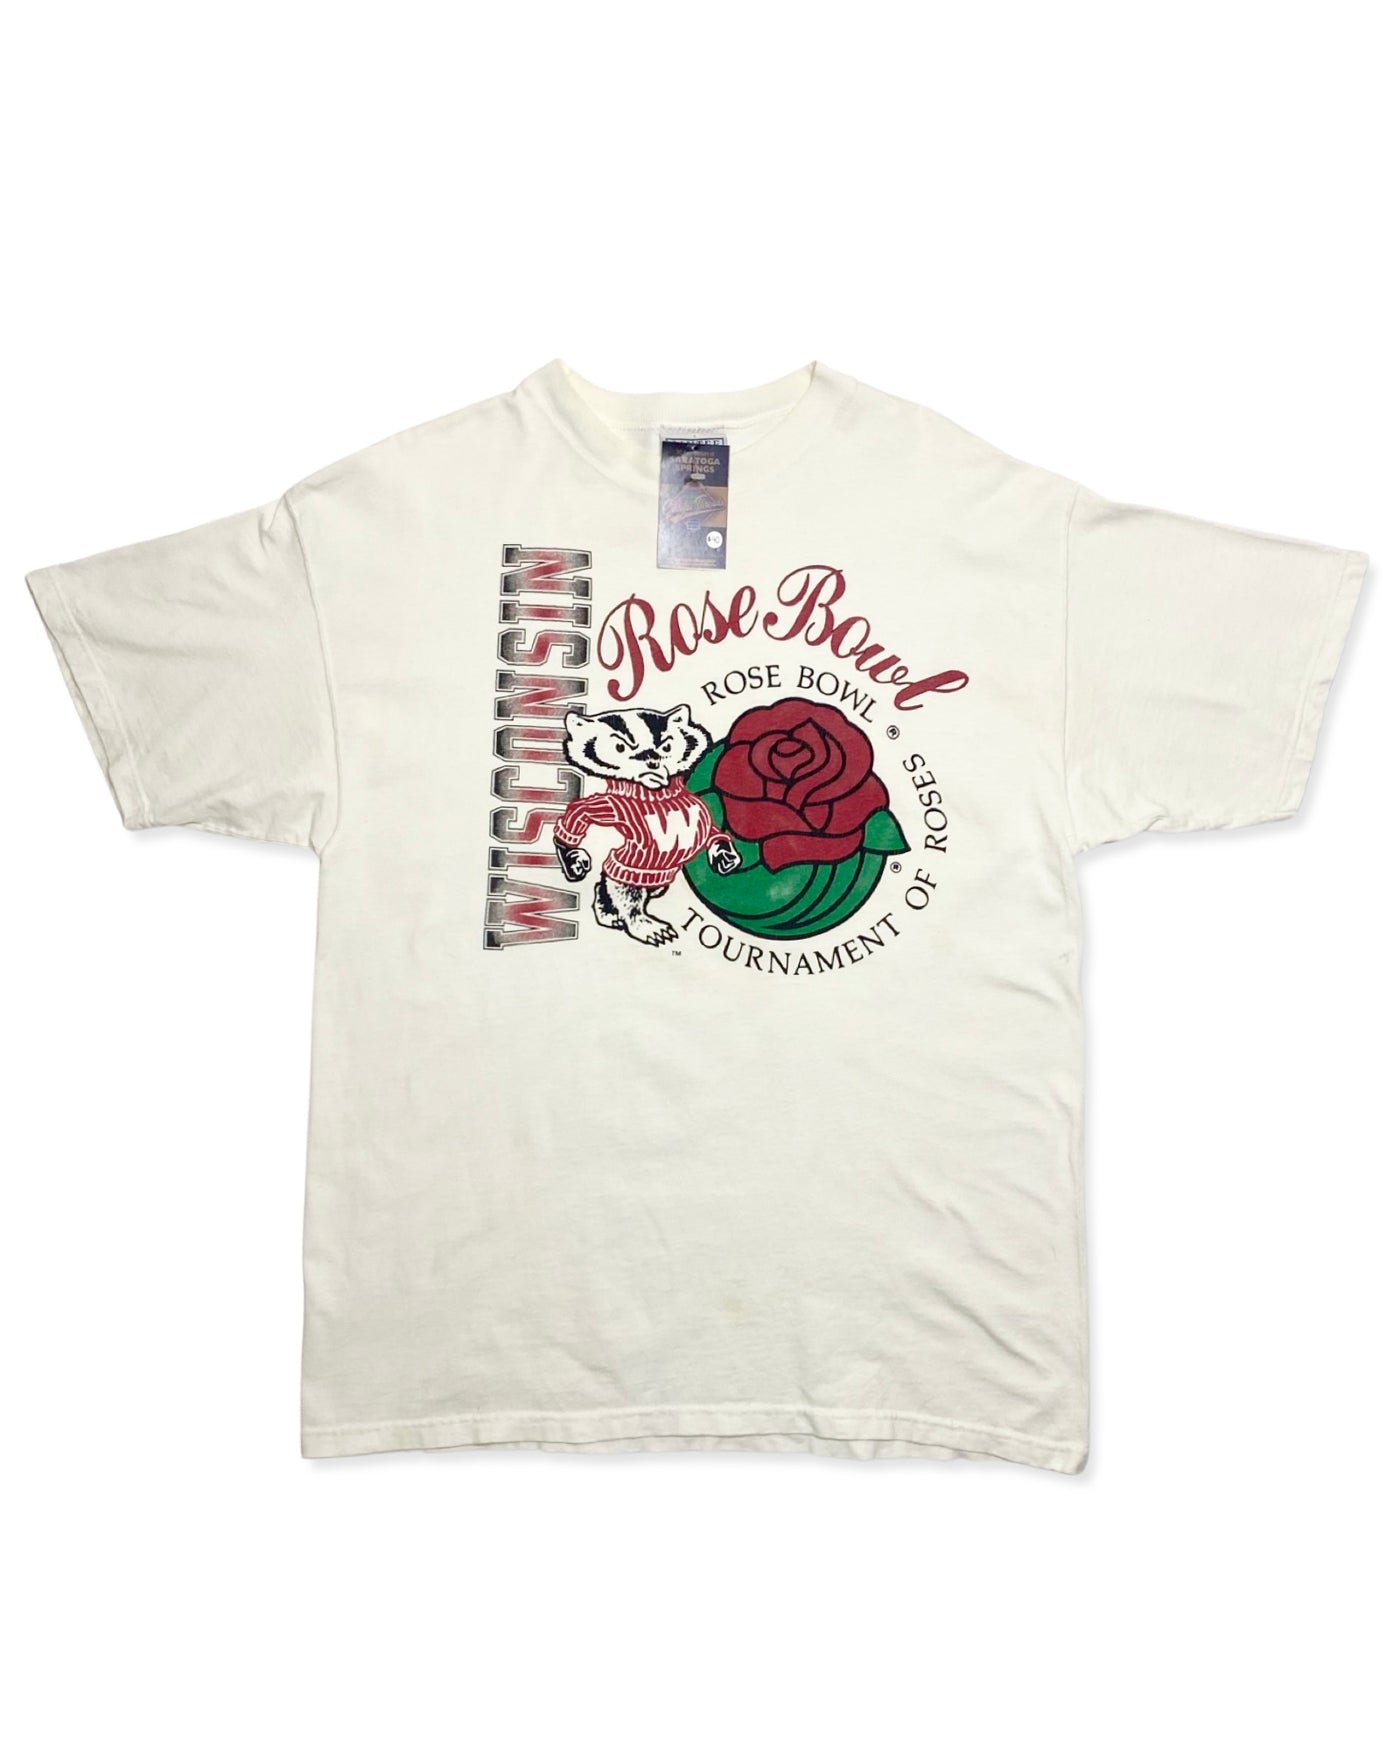 Vintage 1994 Wisconsin Rose Bowl T-Shirt